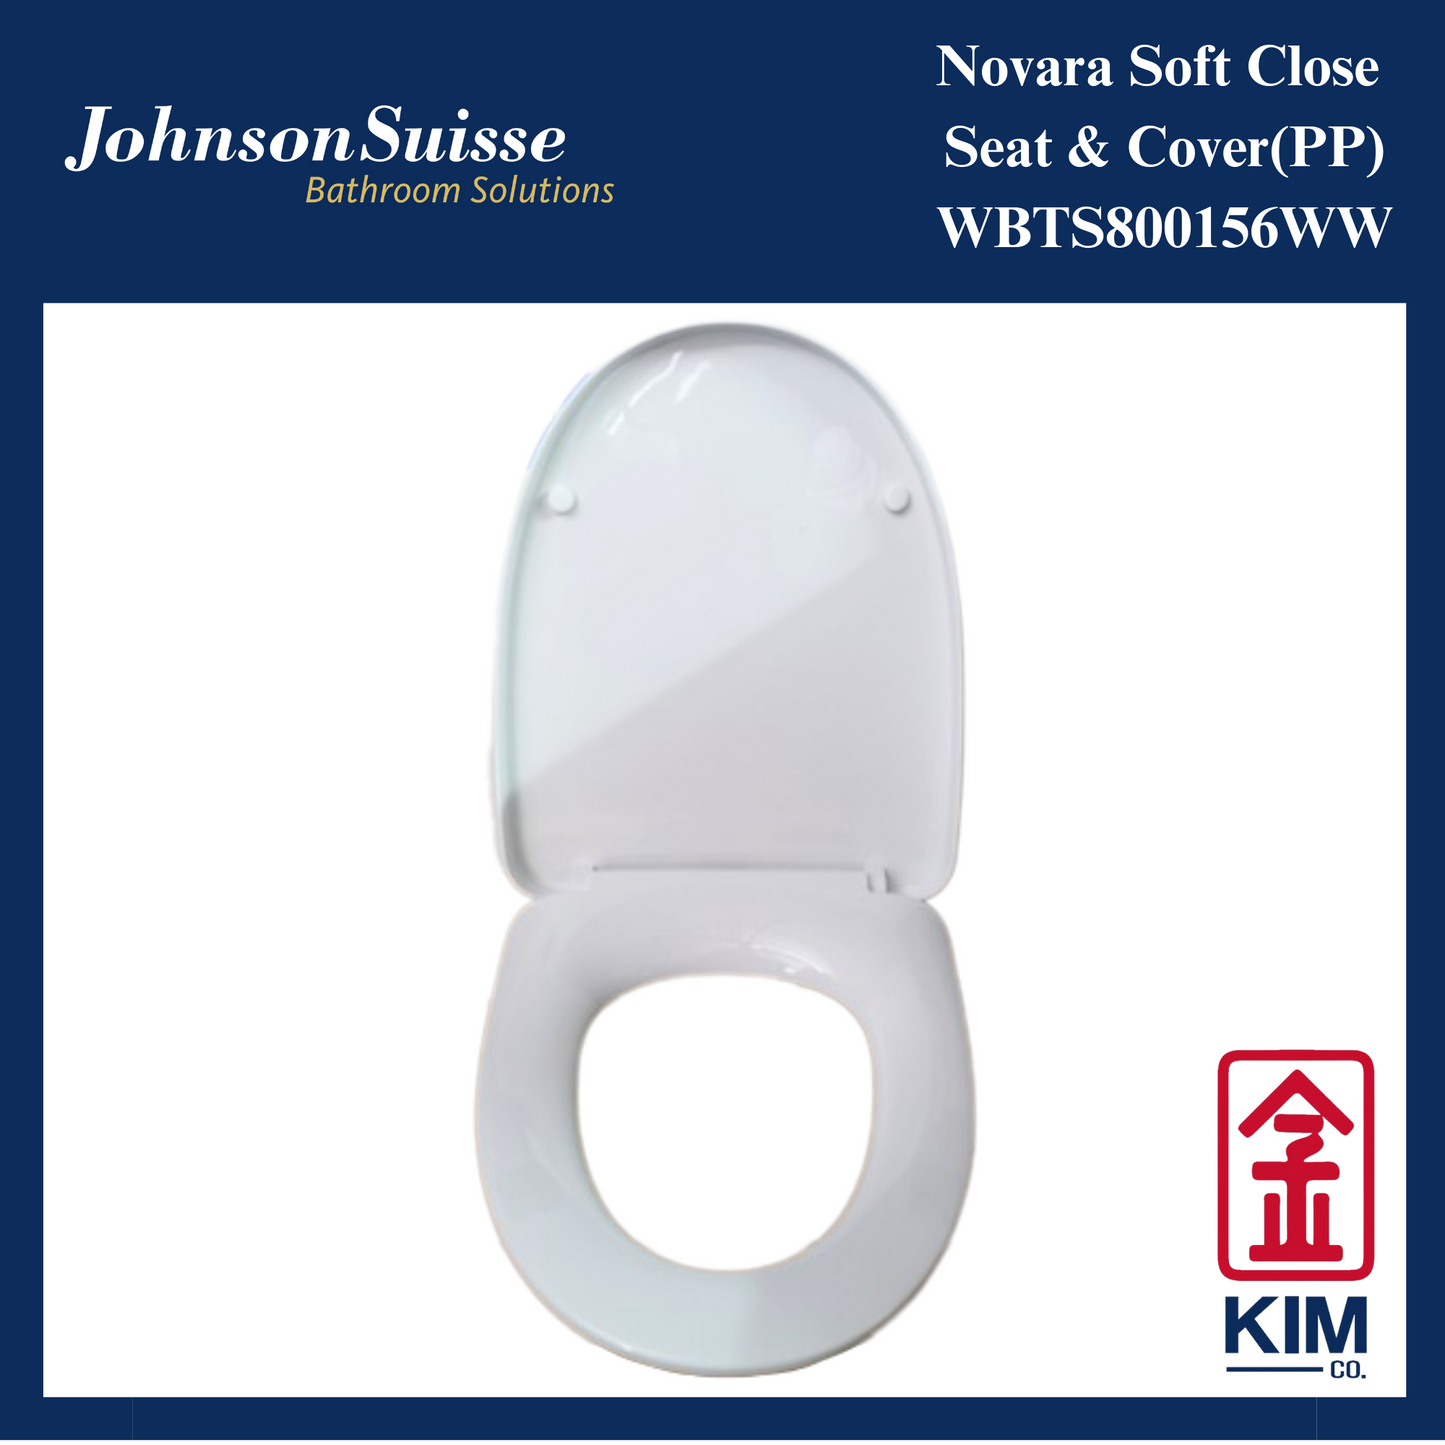 Johnson Suisse Novara Soft Close Seat & Cover (PP)(WBTS800156WW)